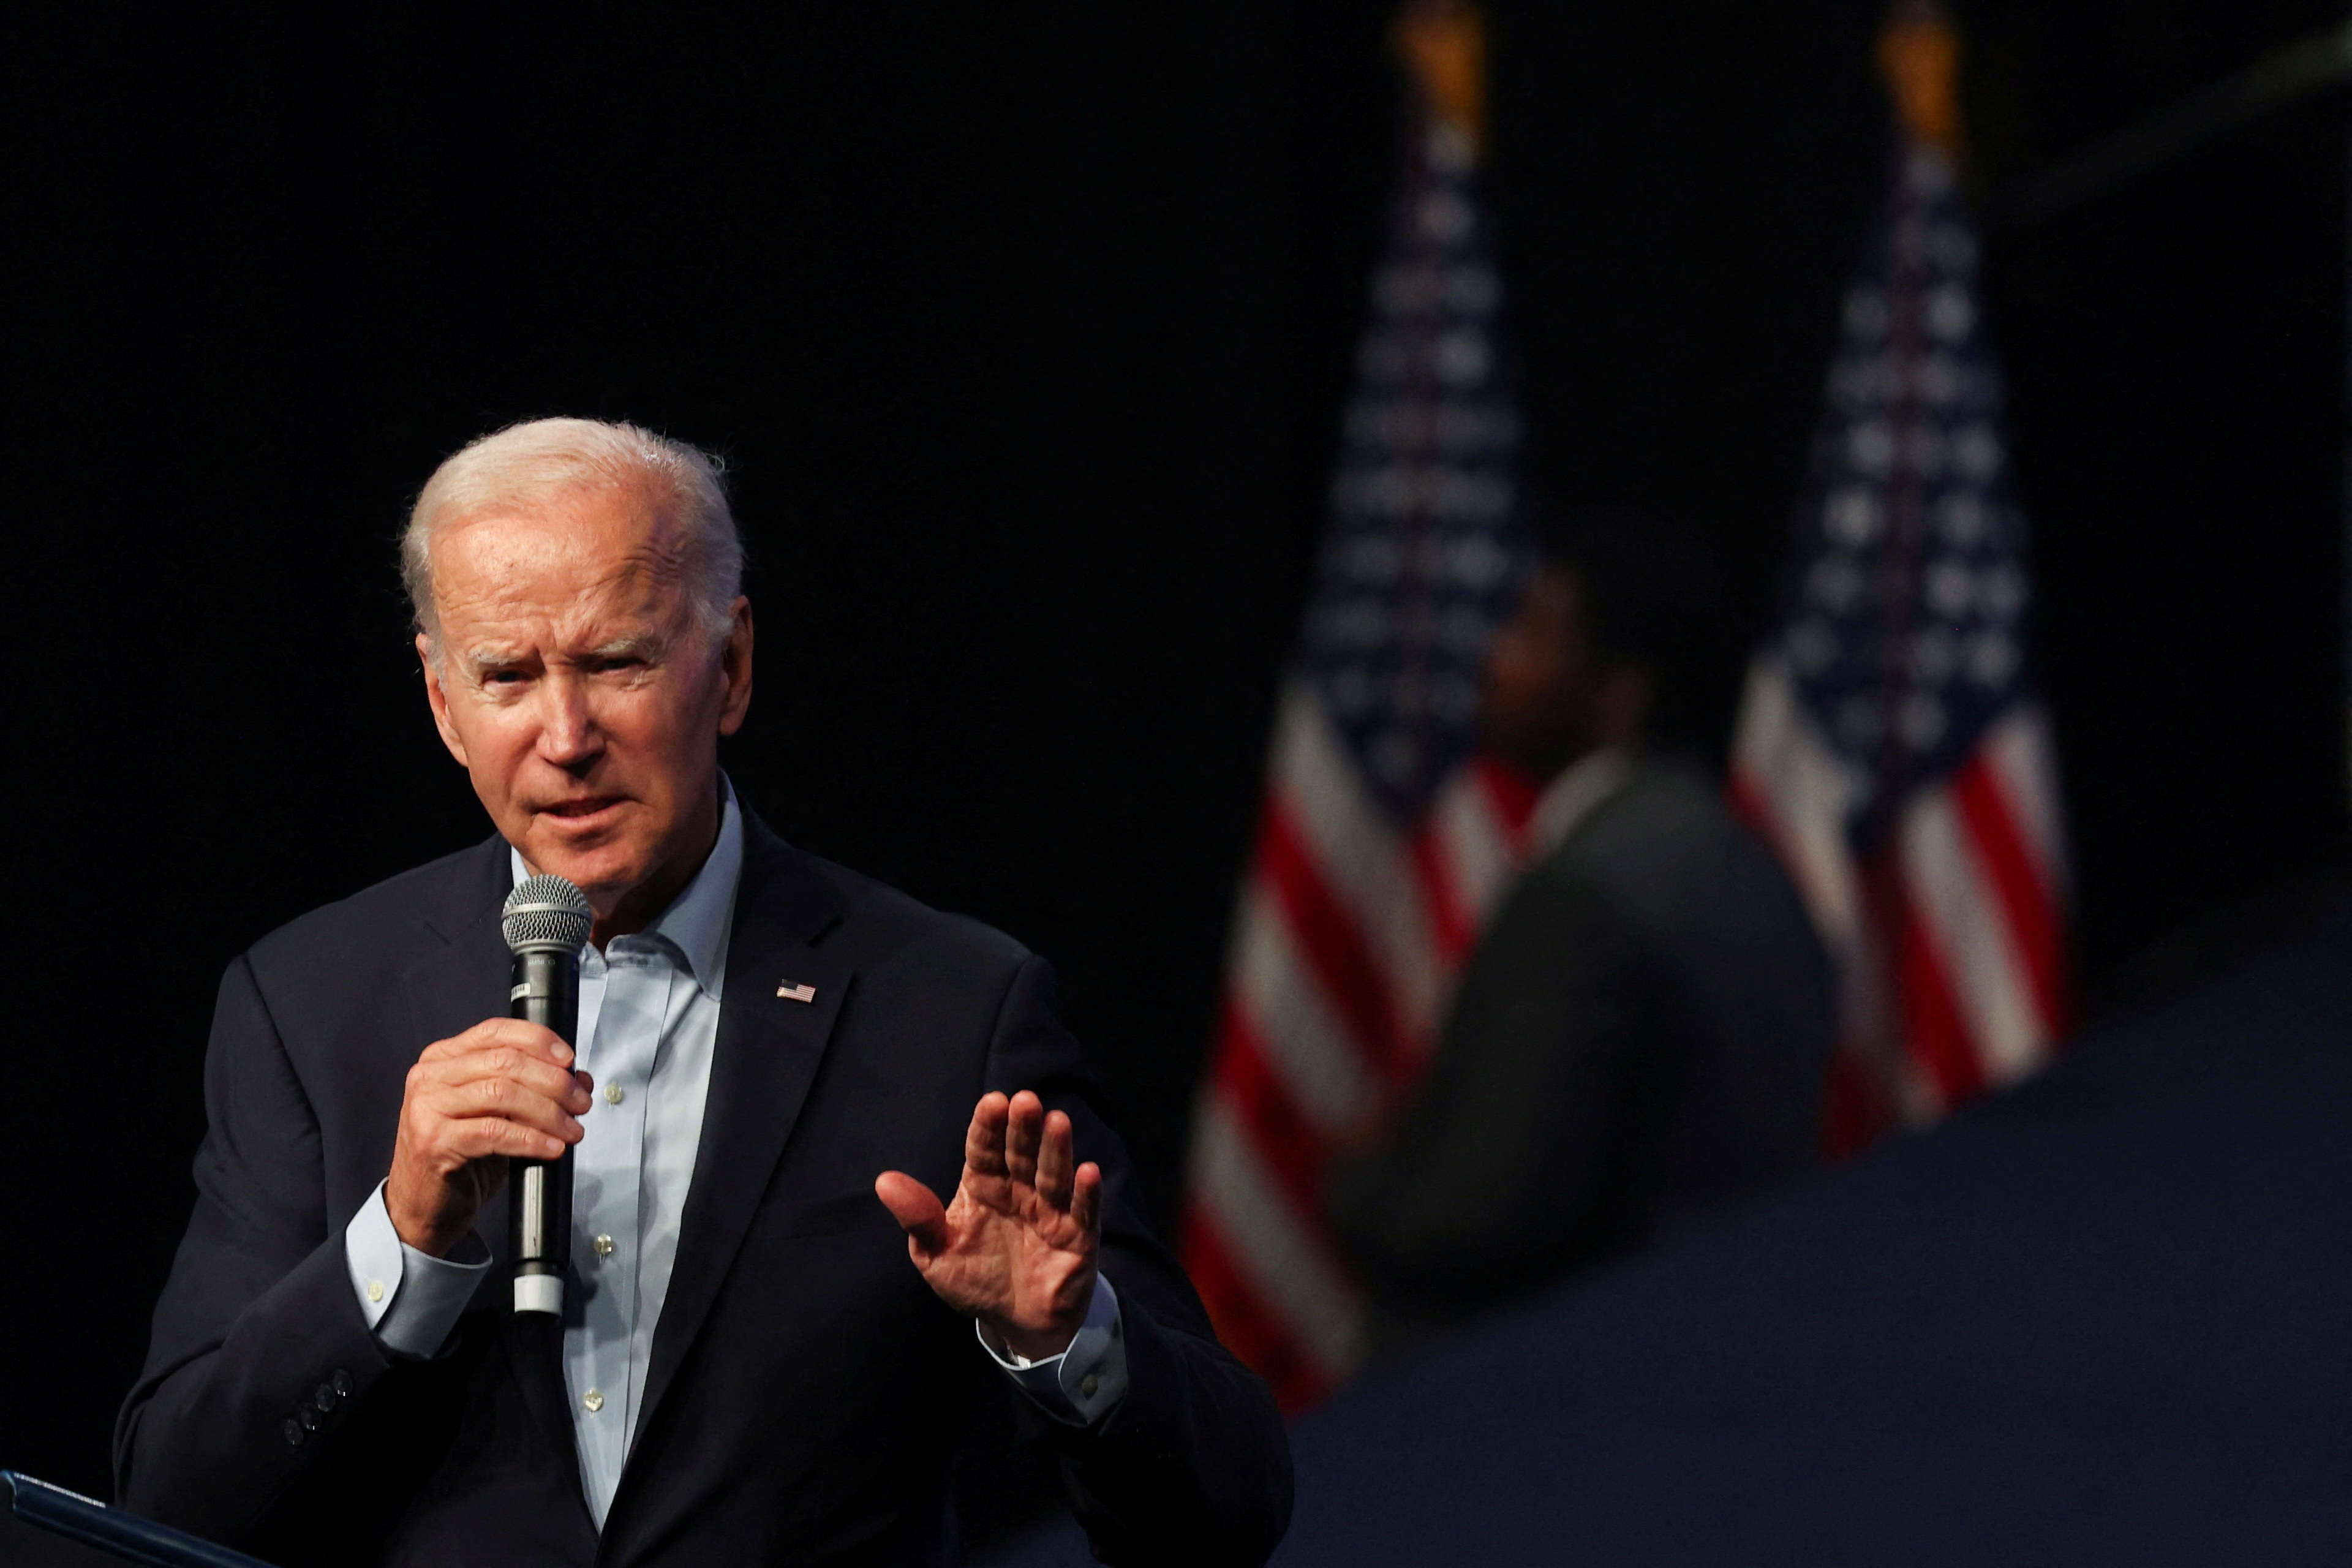 U.S. President Joe Biden campaigns ahead of midterm elections, in Pennsylvania